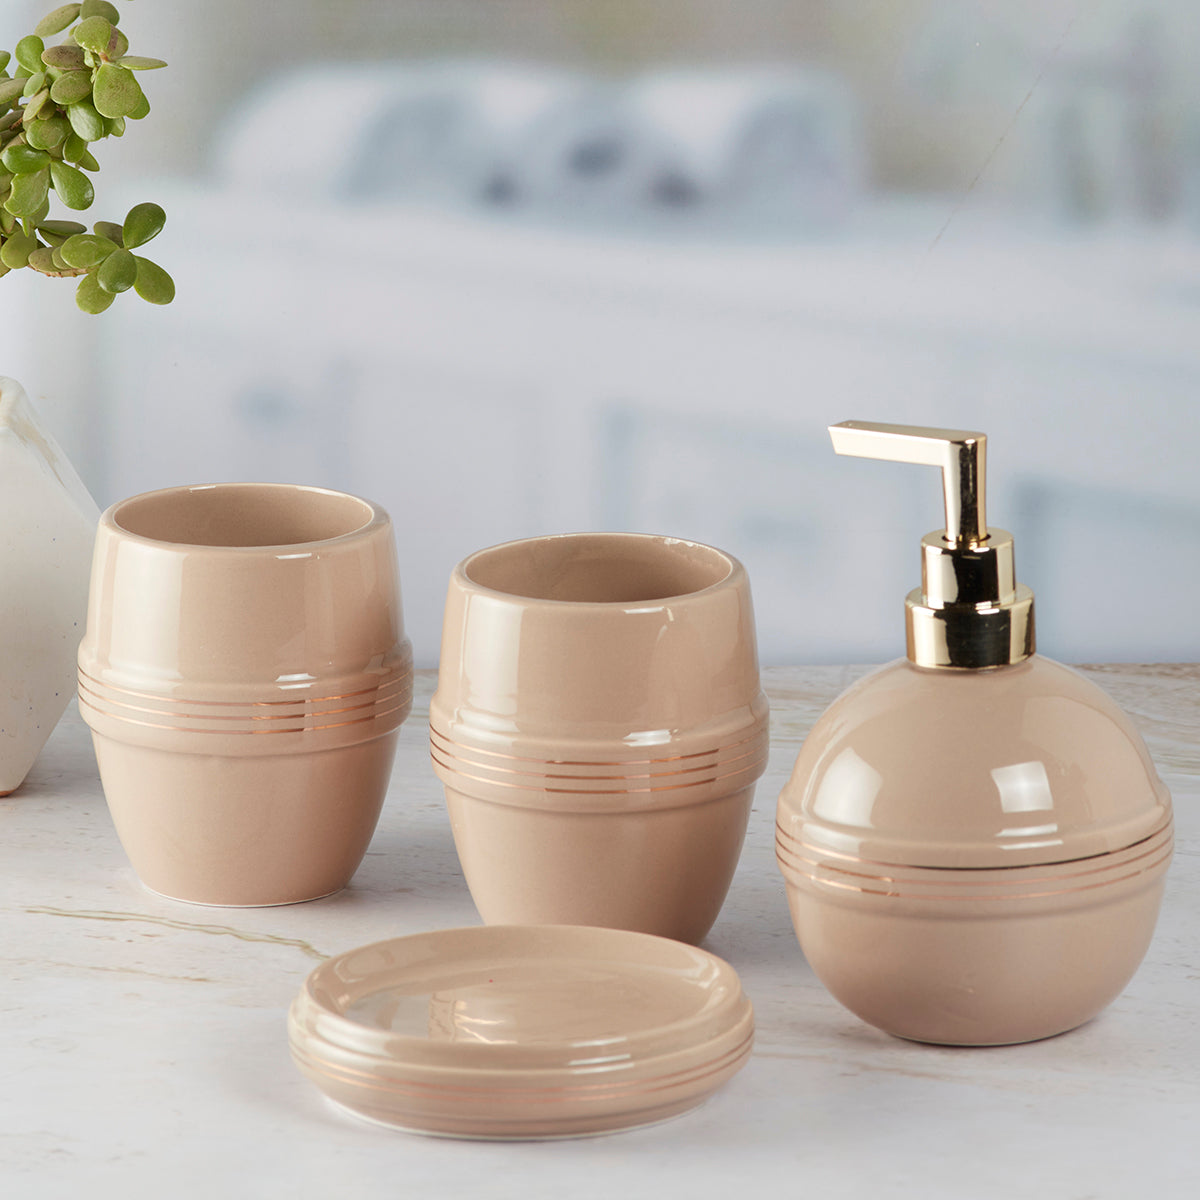 Ceramic Bathroom Accessories Set of 4 Bath Set with Soap Dispenser (5758)